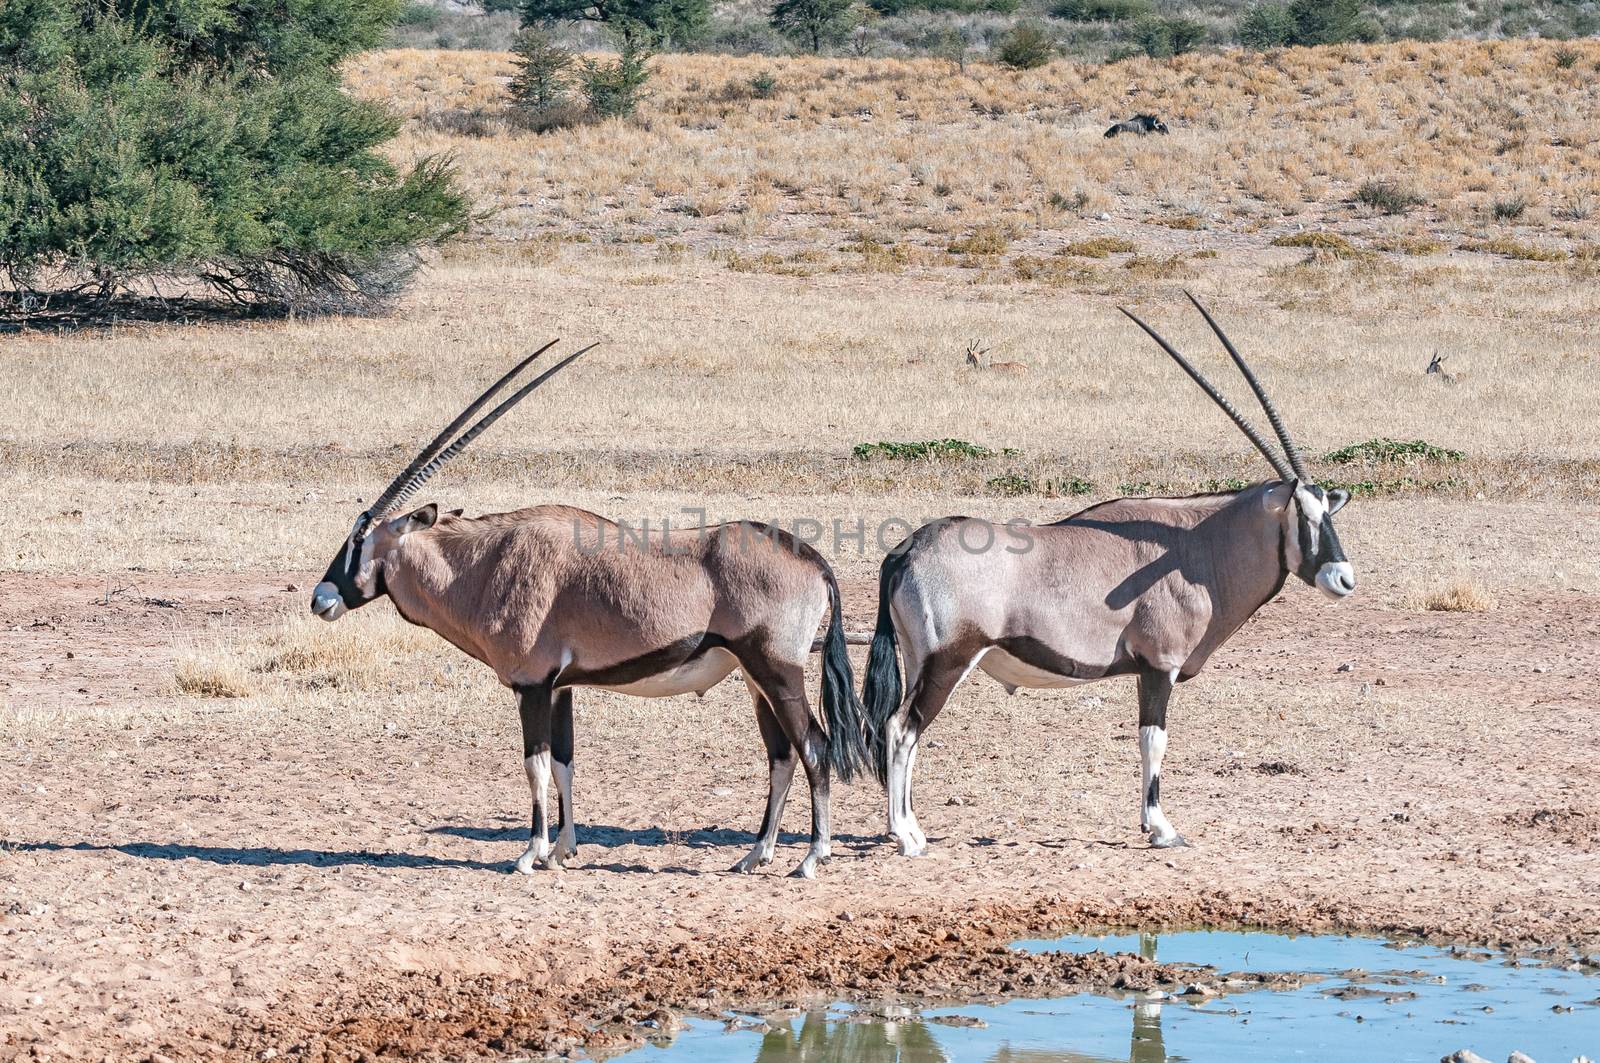 Oryx at a waterhole in the arid Kgalagadi by dpreezg